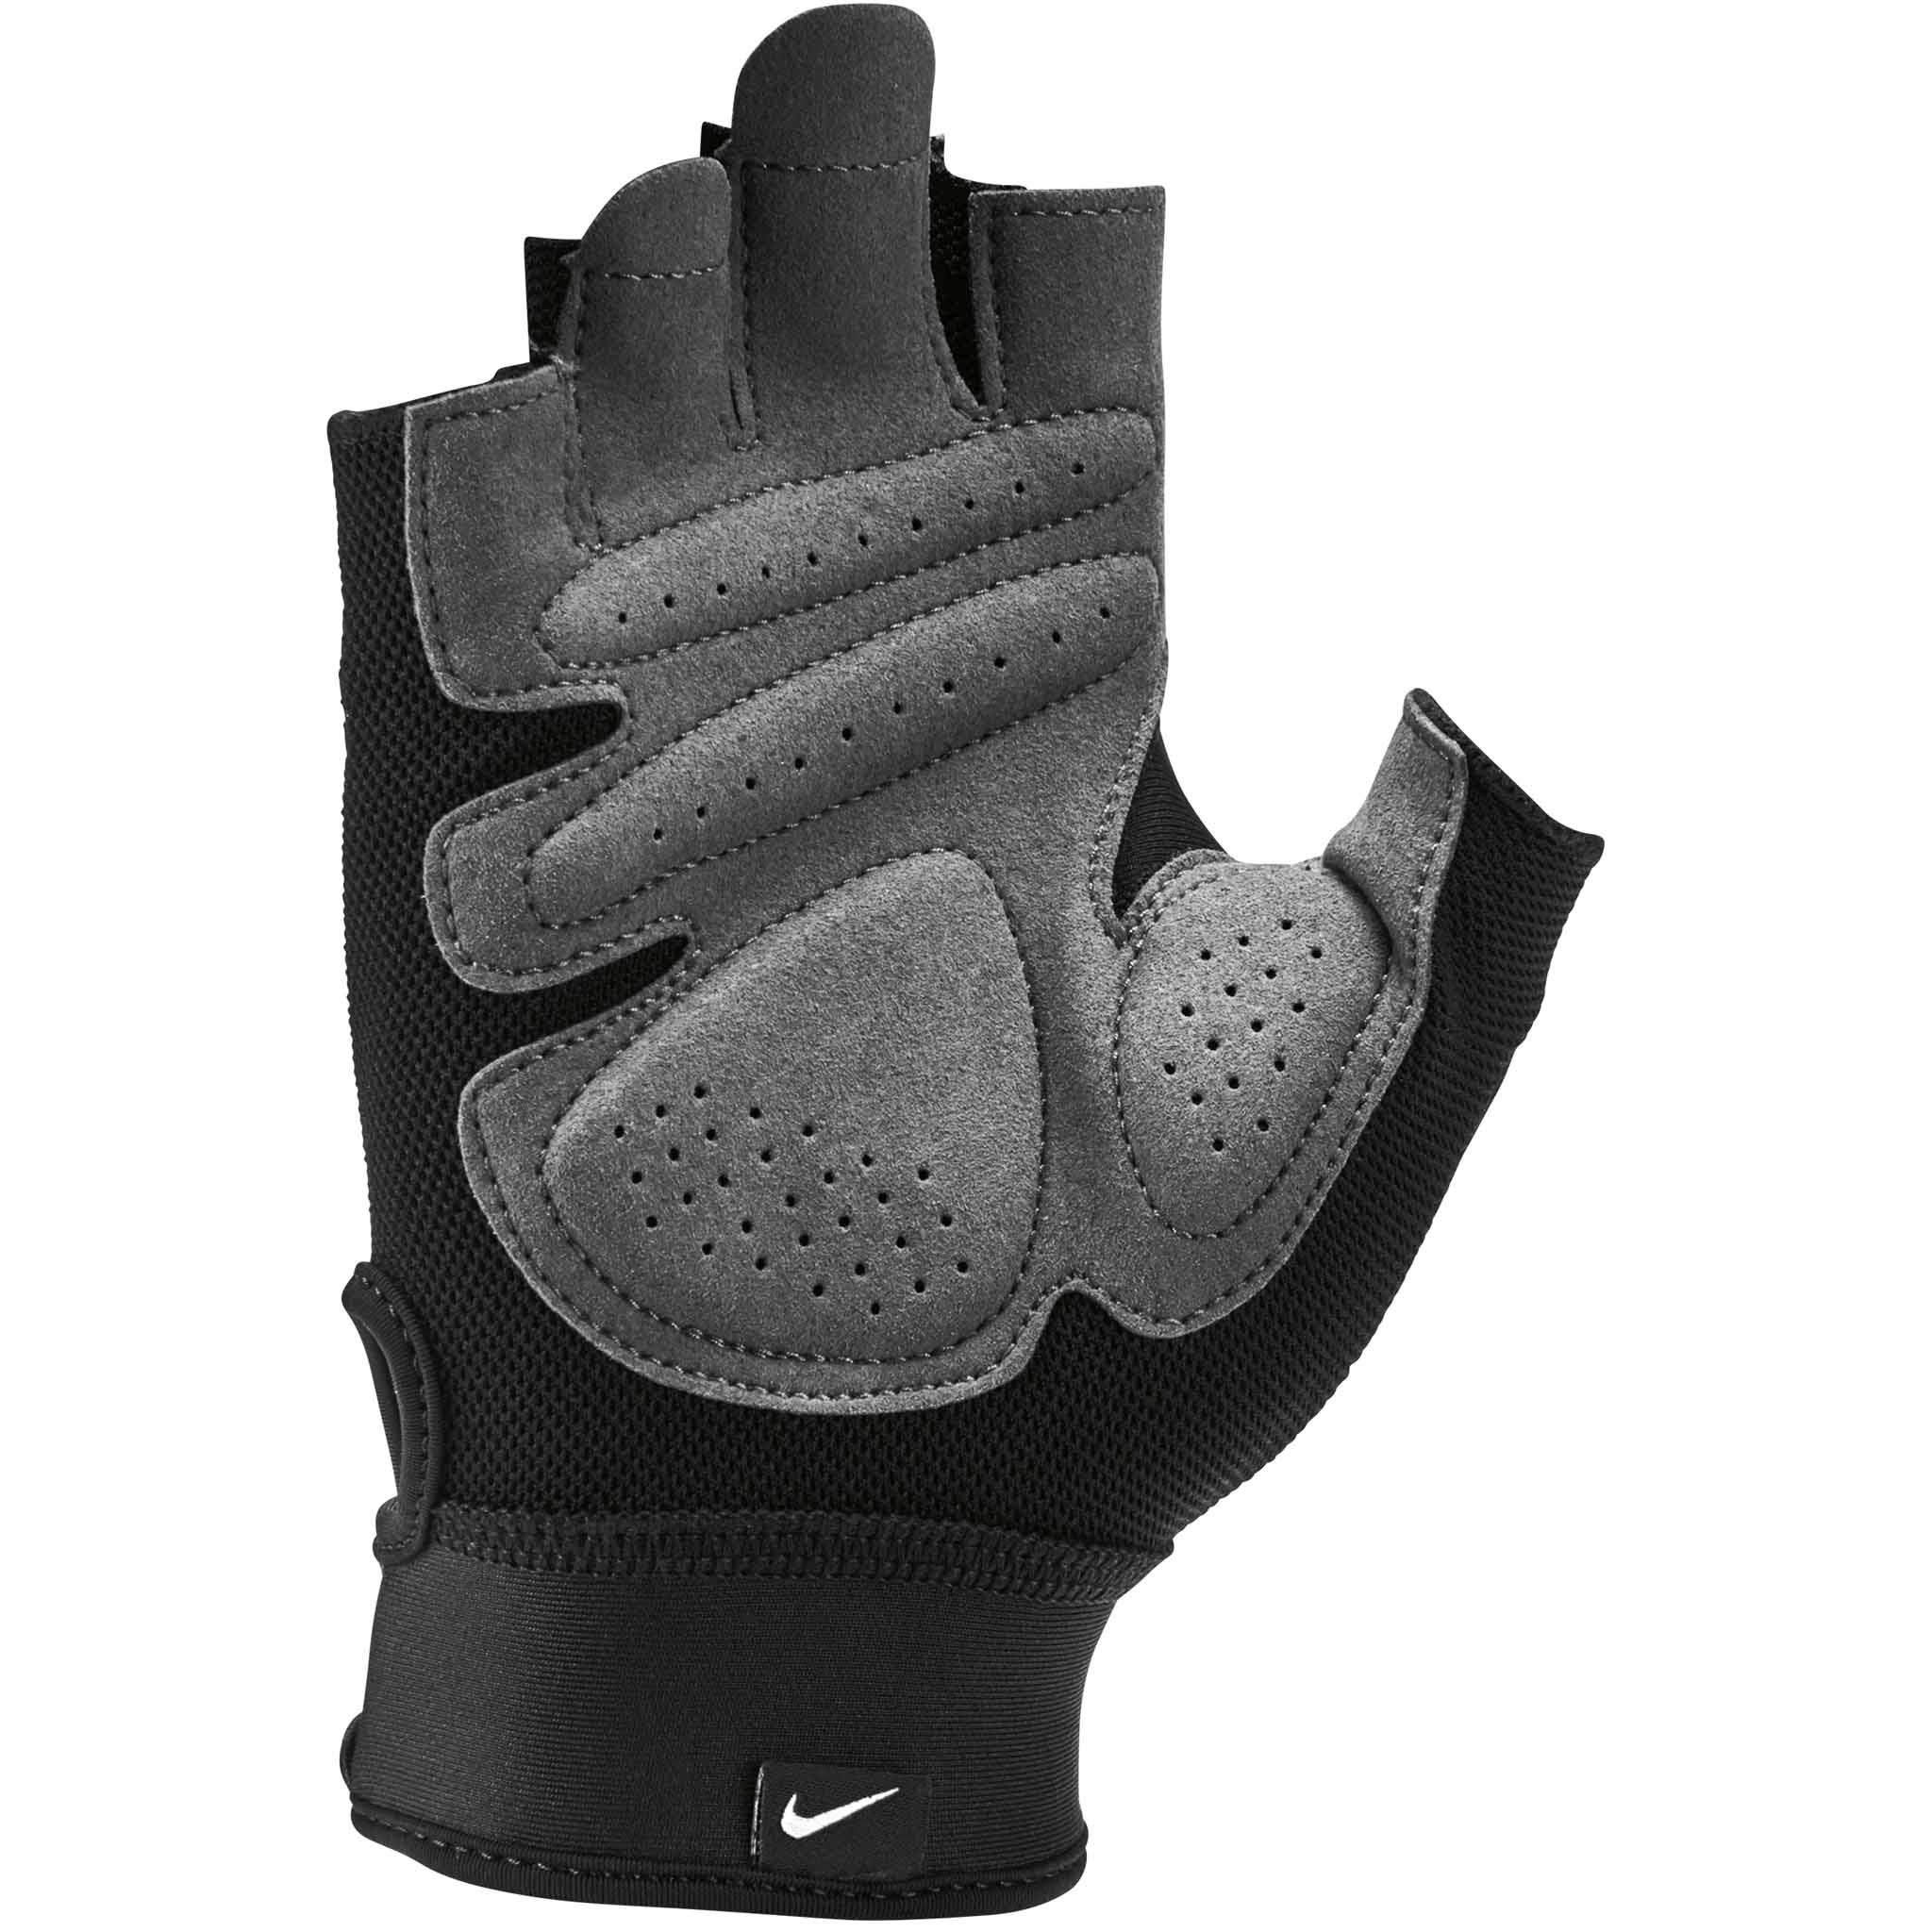 Nike Gants Running Homme - Base Layer - lt smoke grey/black/black 019